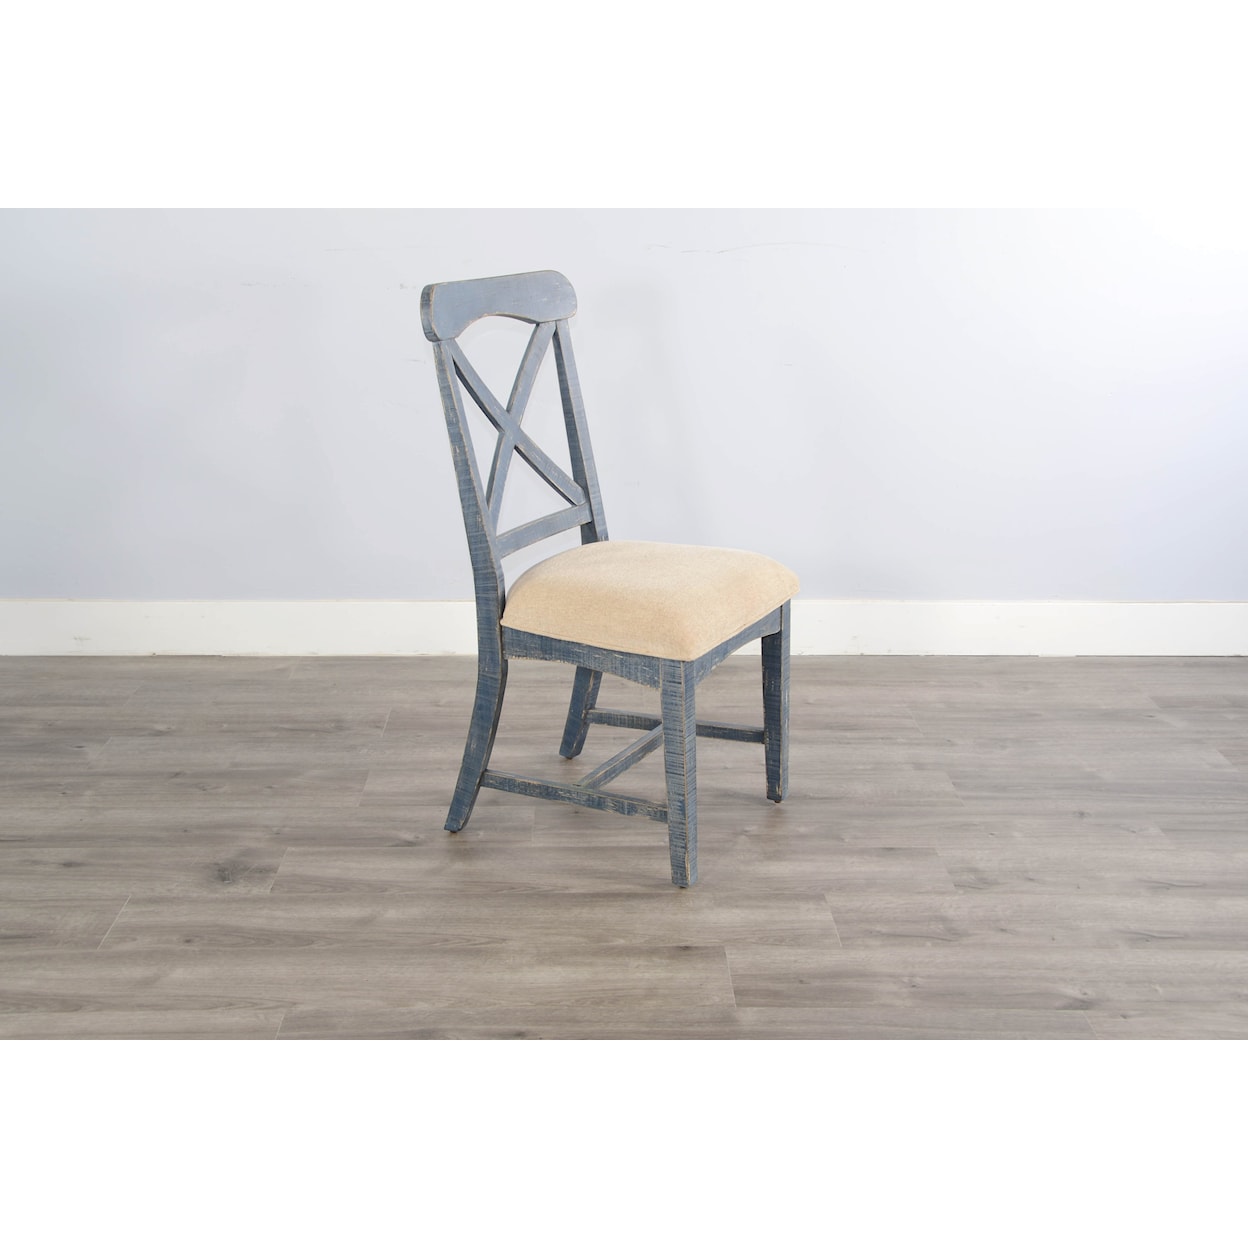 Sunny Designs Marina Ocean Blue Dining Chair, Cushion Seat